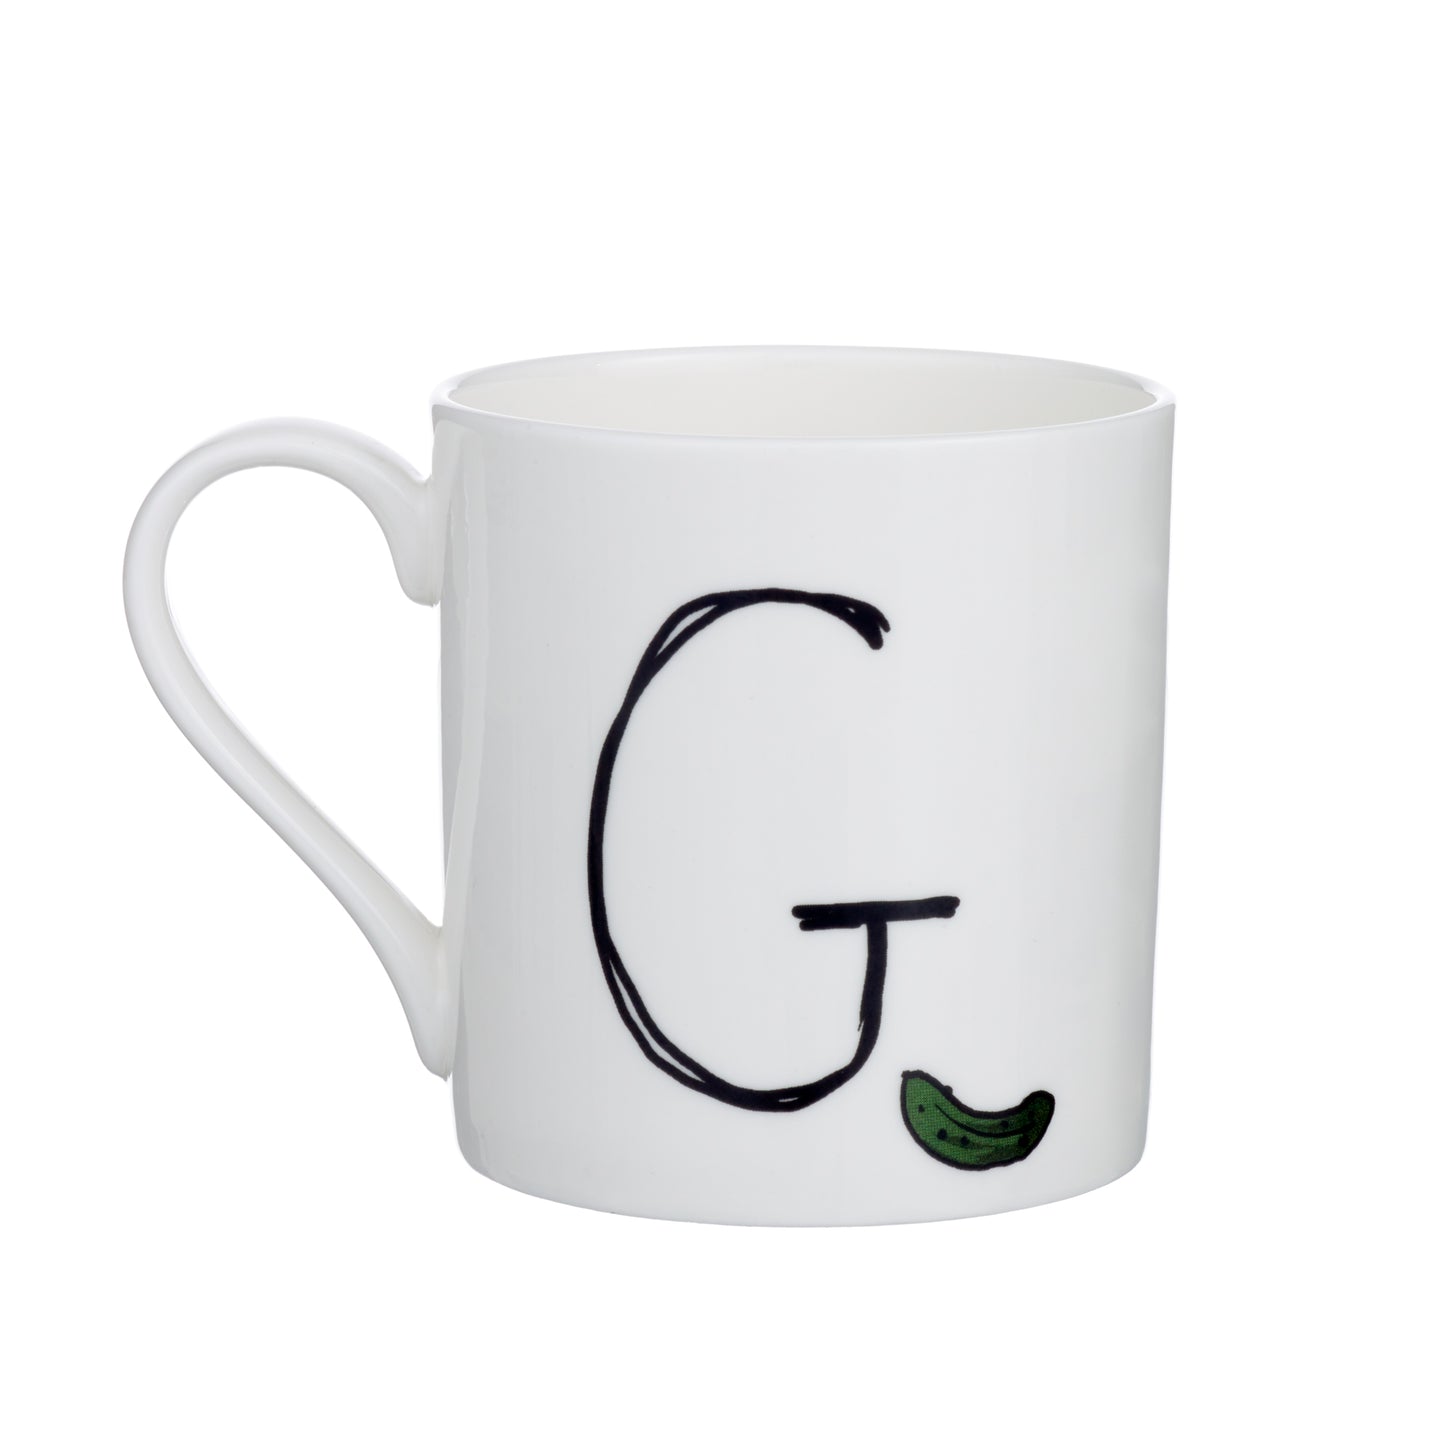 G - Alphabet of Snacking Animals Mug